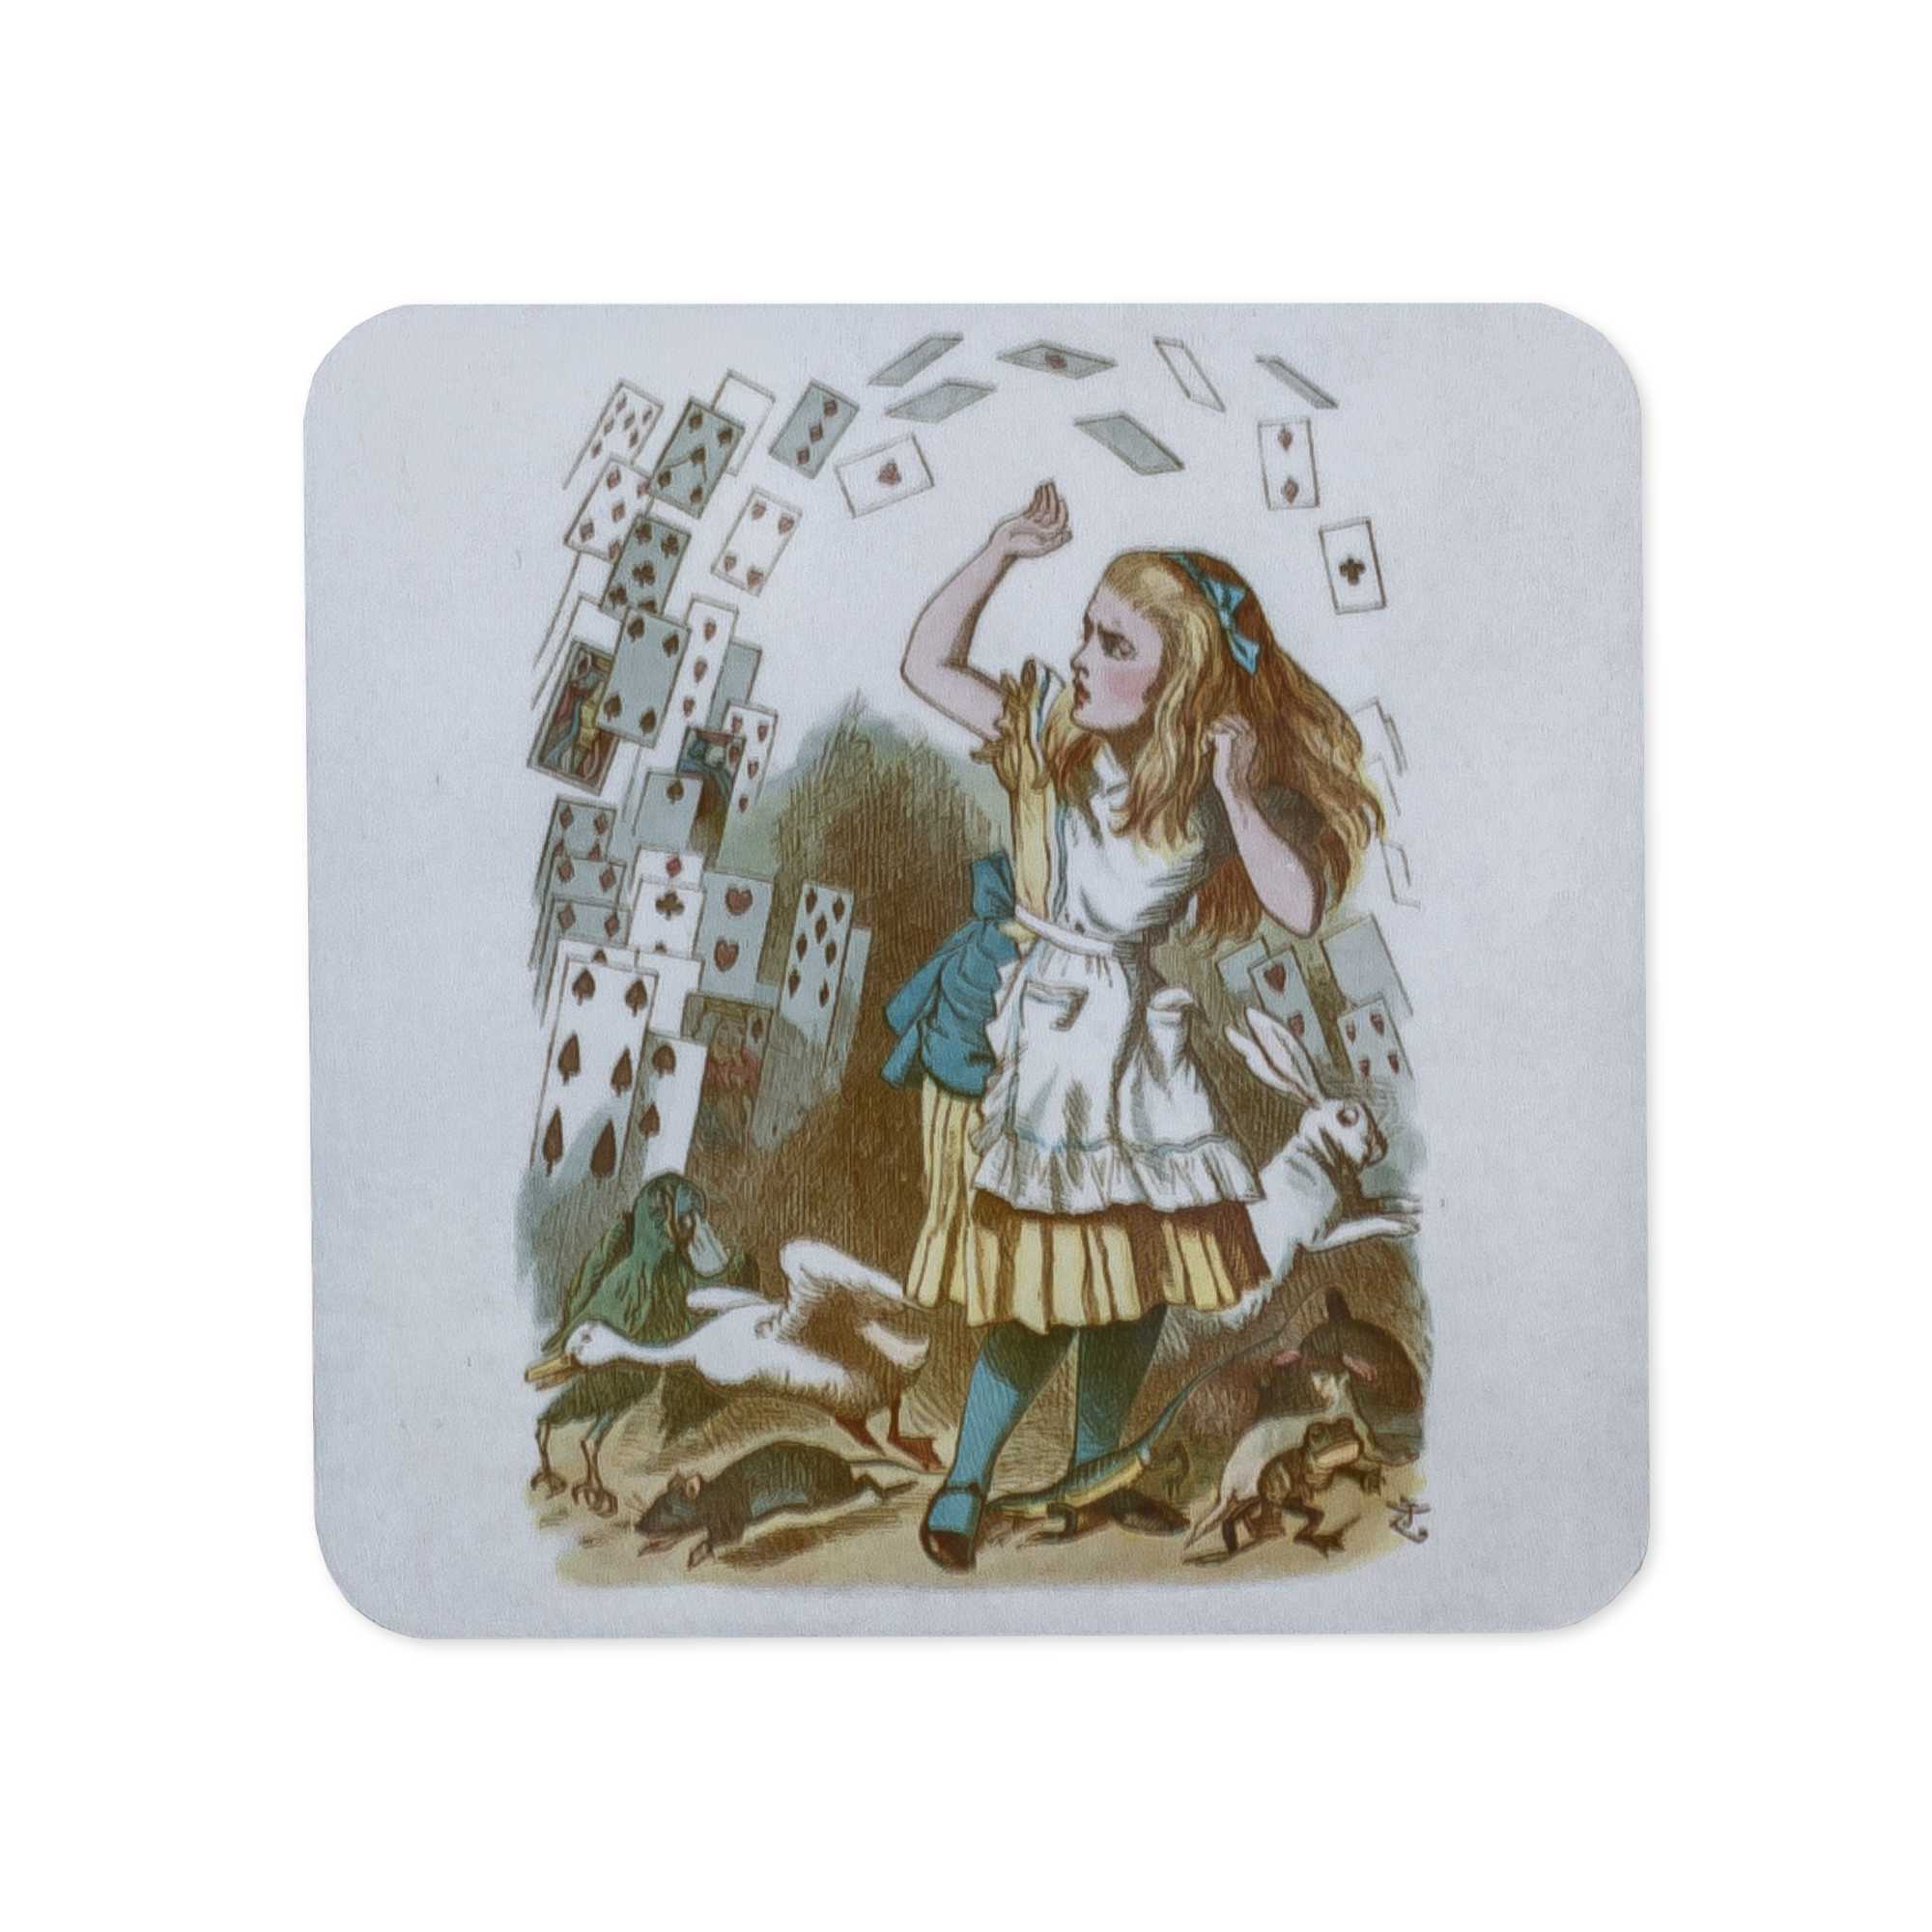 Star Editions Alice's Adventures in Wonderland coaster, cards